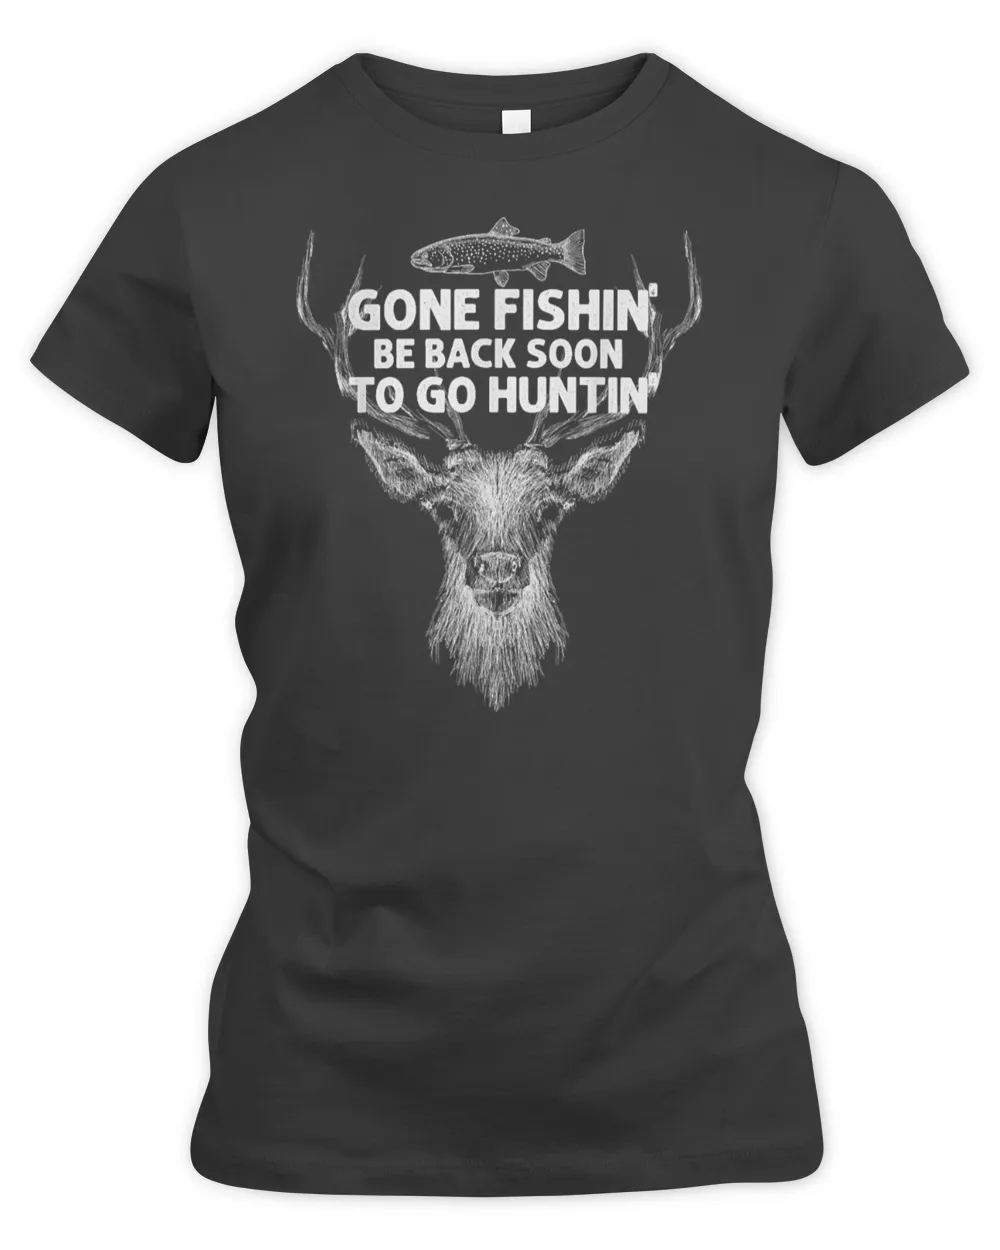 Gone Fishin' Be Back Soon To Go Huntin' Shirt